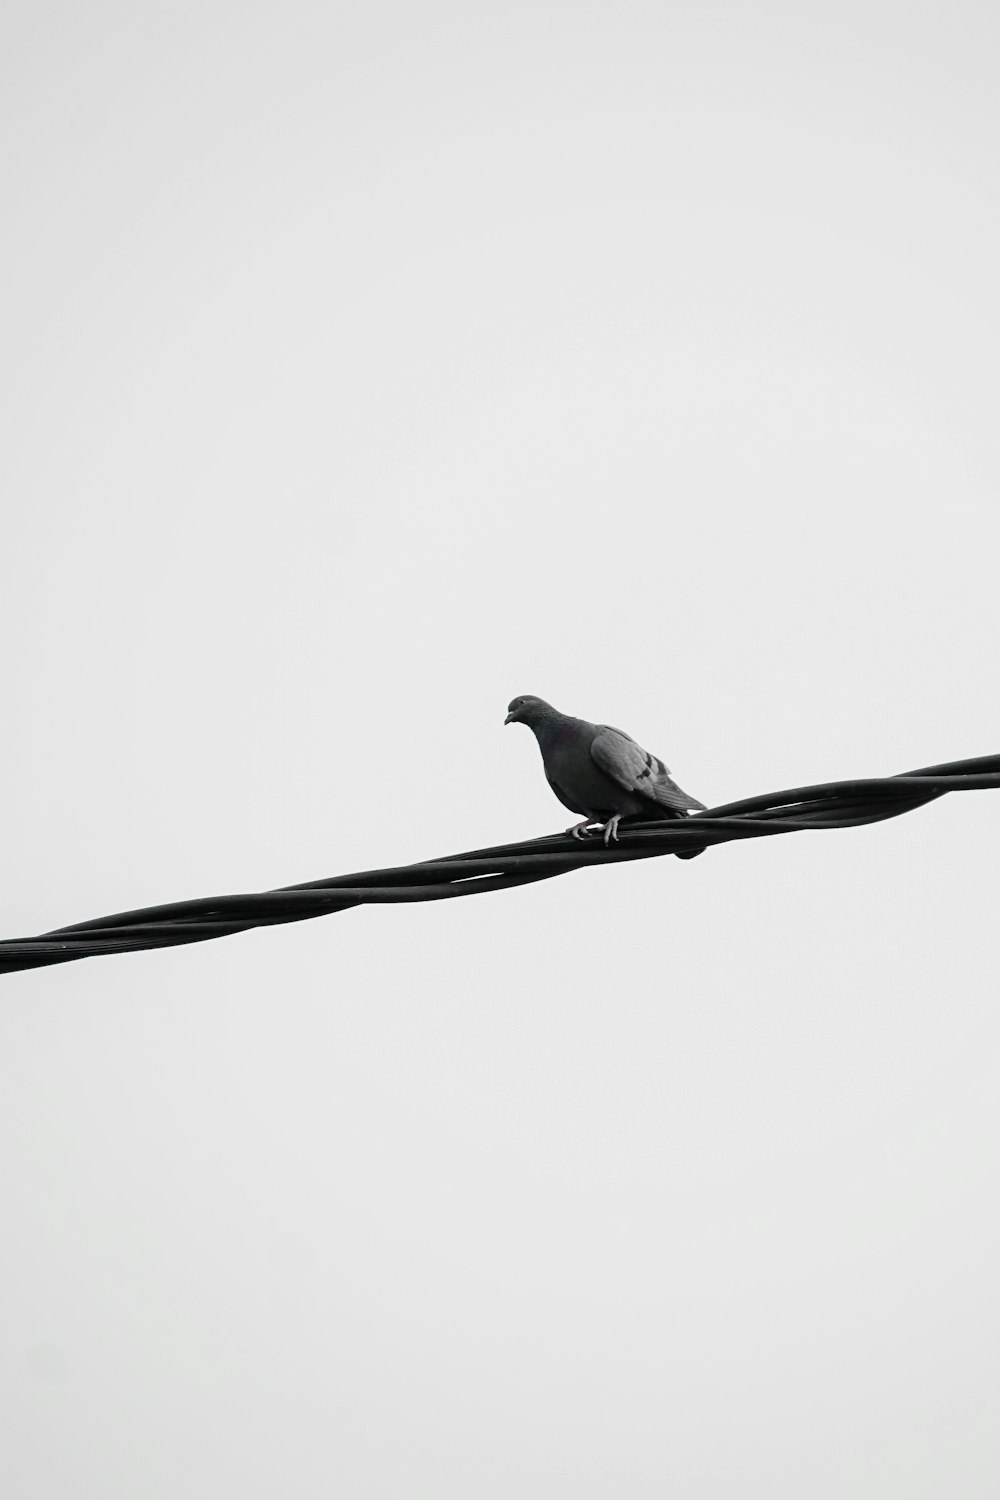 white and black bird on black wire